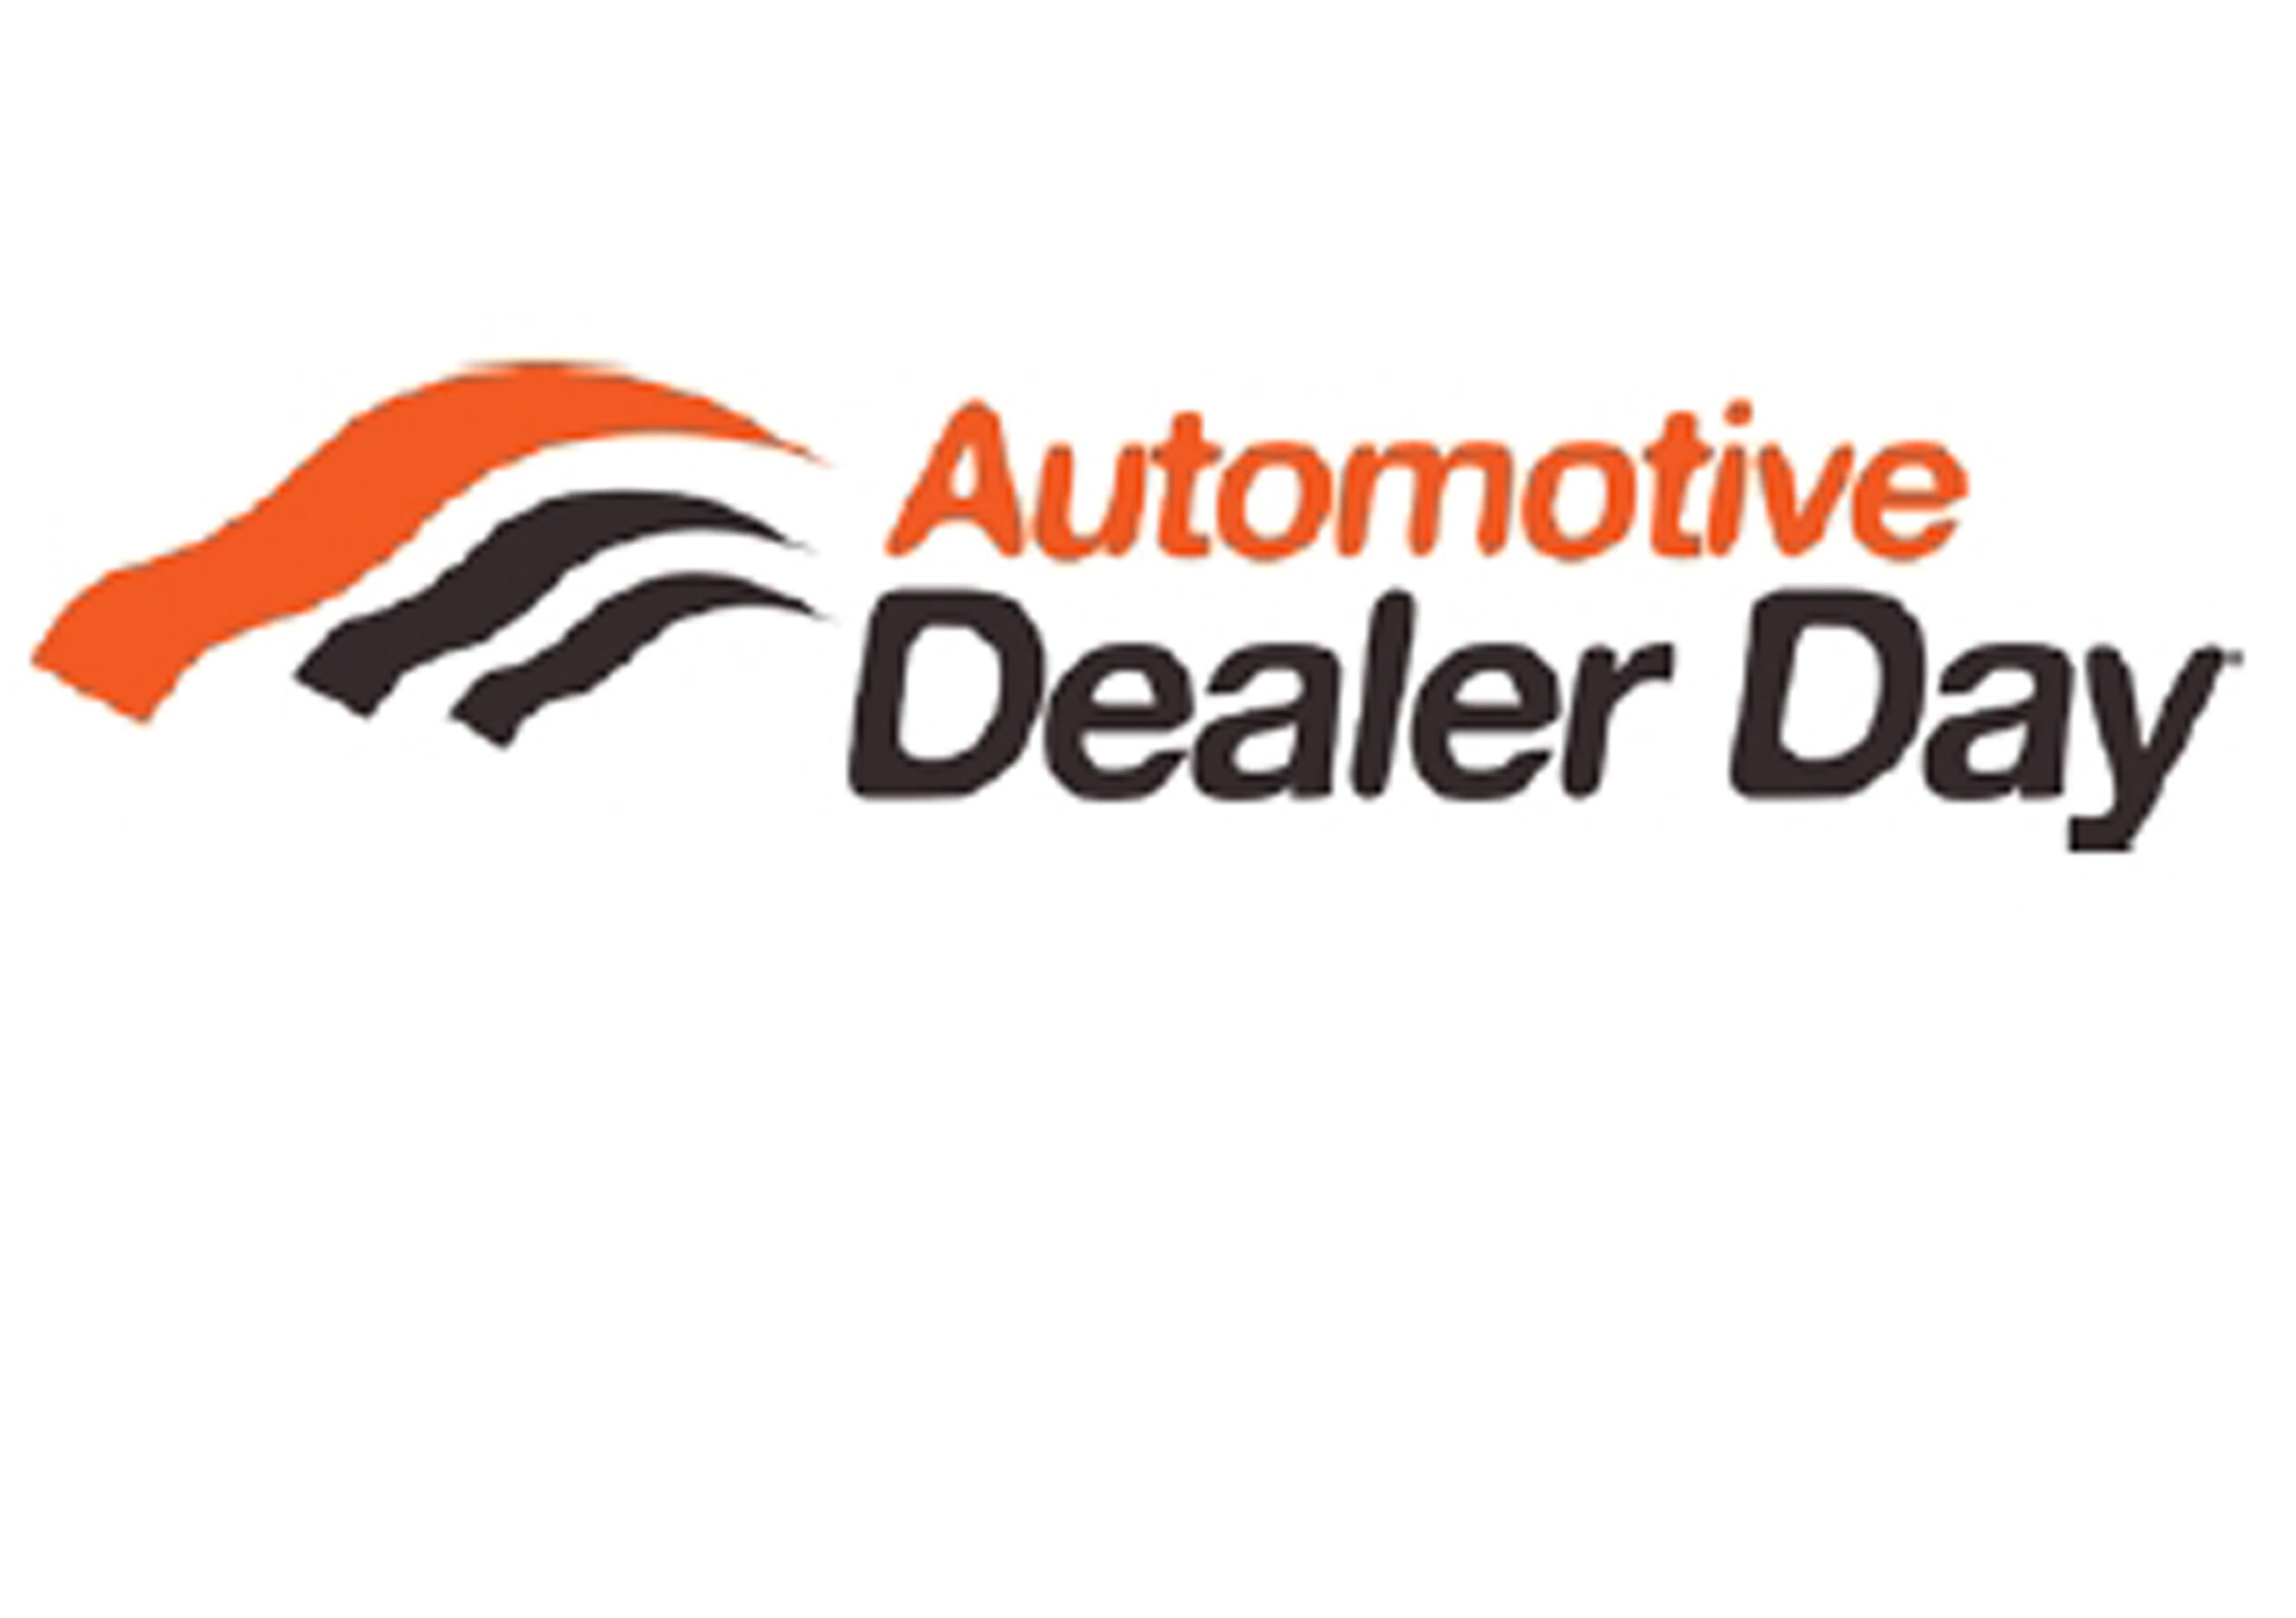 Automotive Dealer Day 2014: dal 20 al 22 maggio a Veronafiere